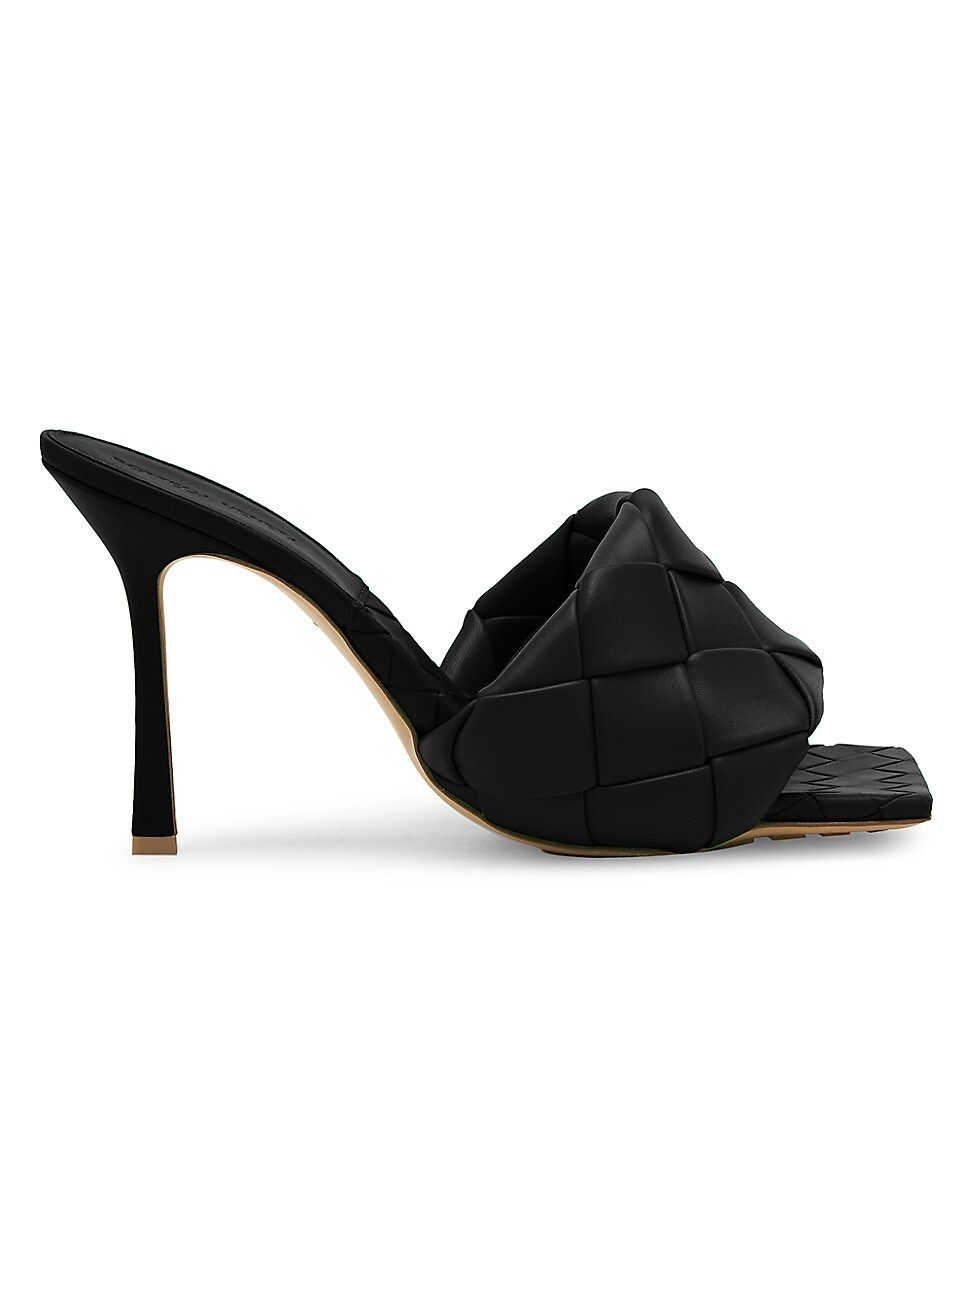 Bottega Veneta Women's Lido Leather Mules - Black - Size 9.5 | Saks Fifth Avenue